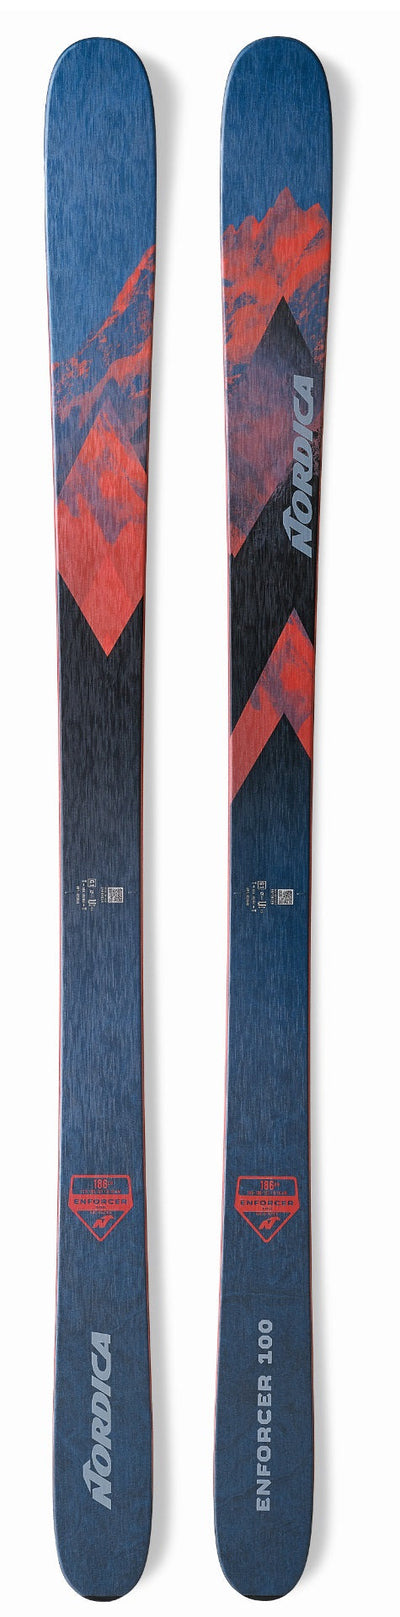 Nordica Enforcer 100 Snow Skis w- Attack 14 Bindings